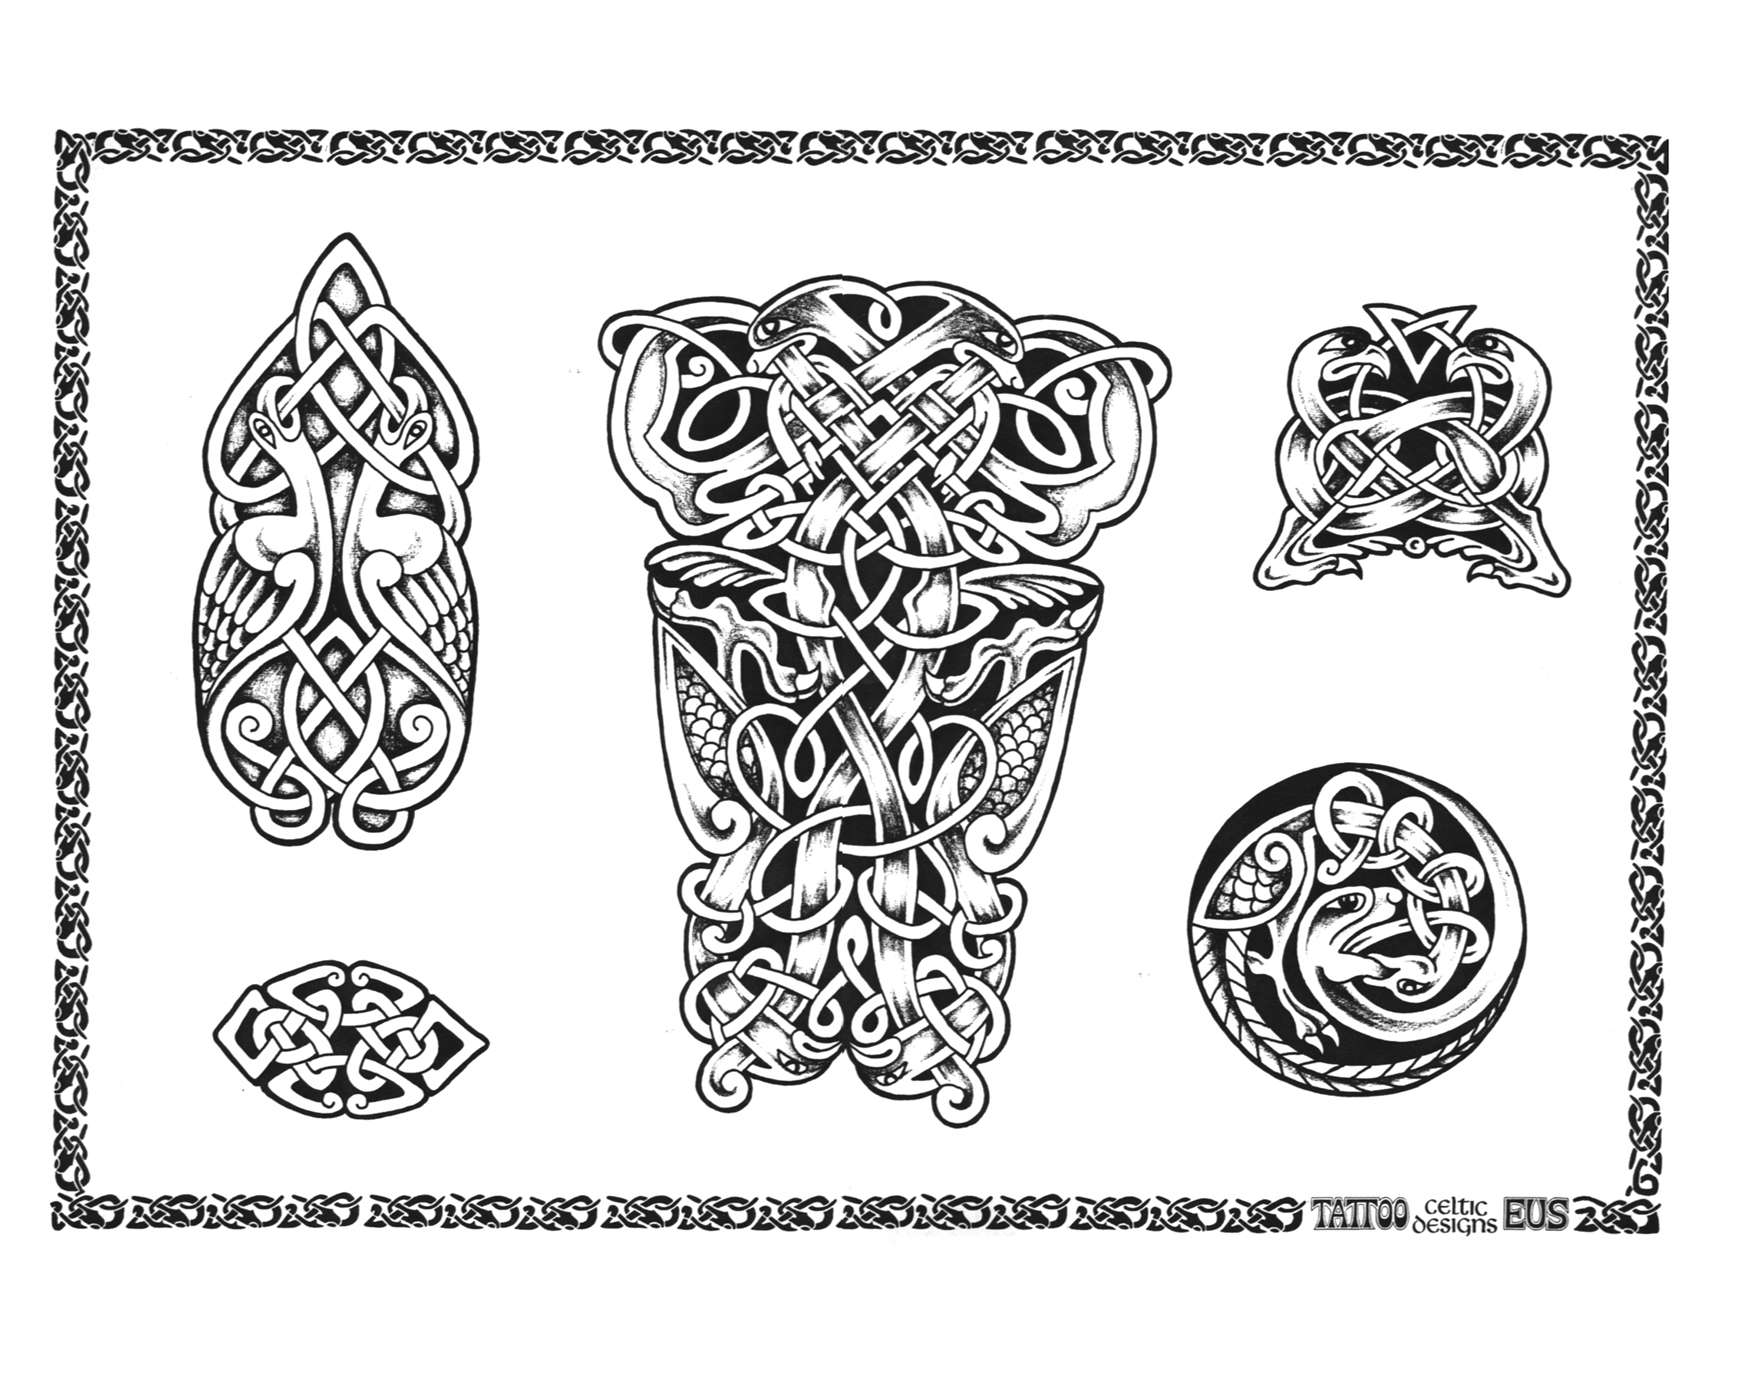 American Home Design Complaints on Celtic 0571   Celtic Tattoo Designs   Home   Tattoo Designs